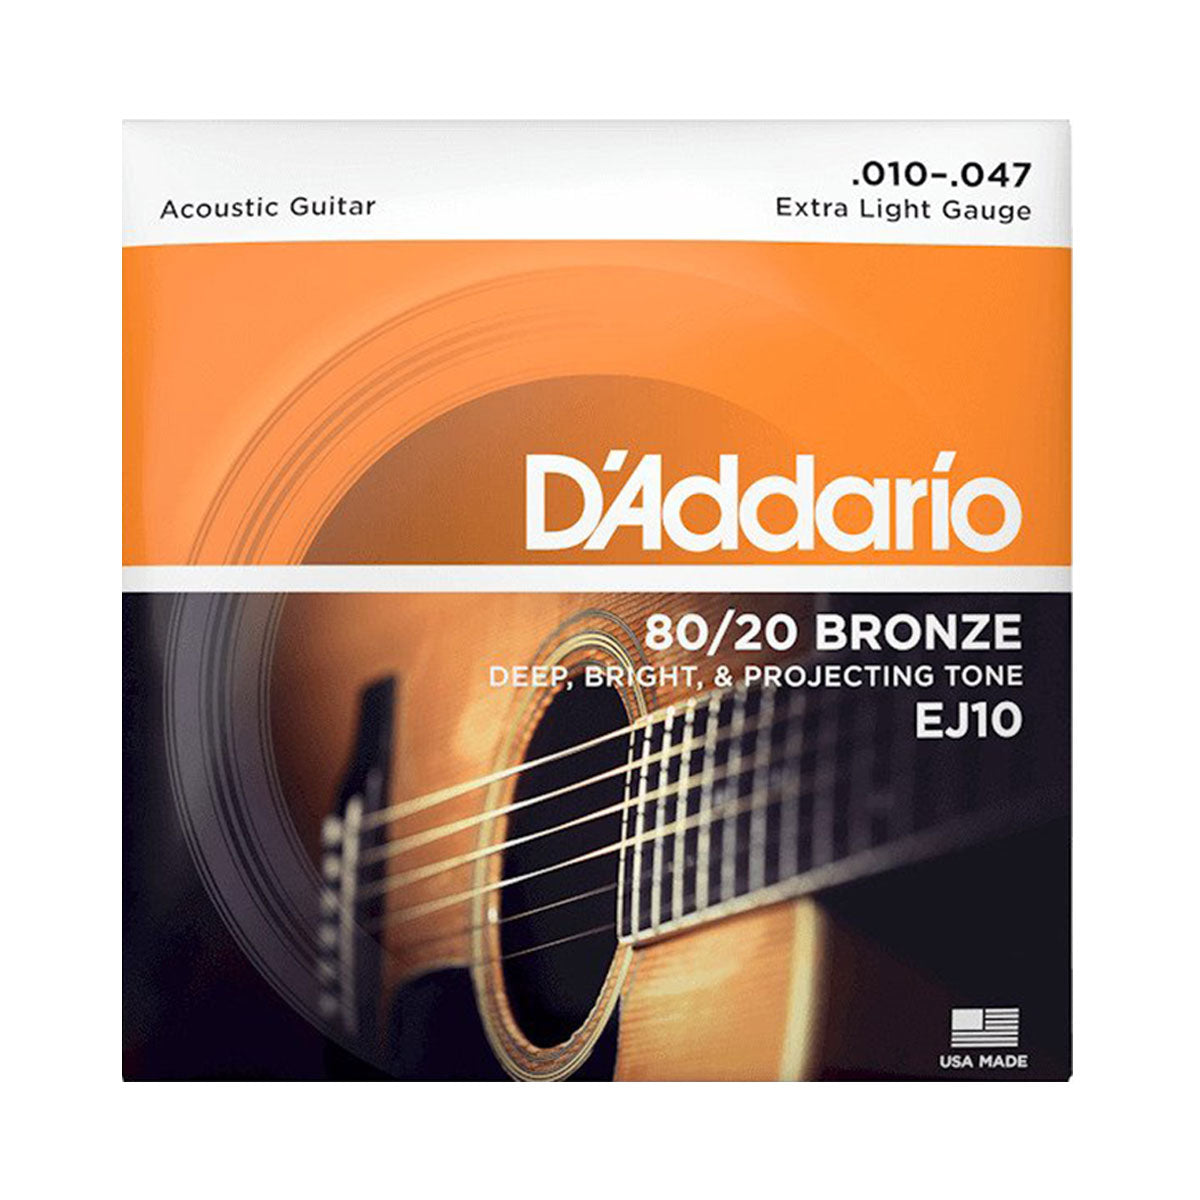 D'Addario EJ10 80/20 Bronze Extra Light Acoustic Guitar Strings 10-47